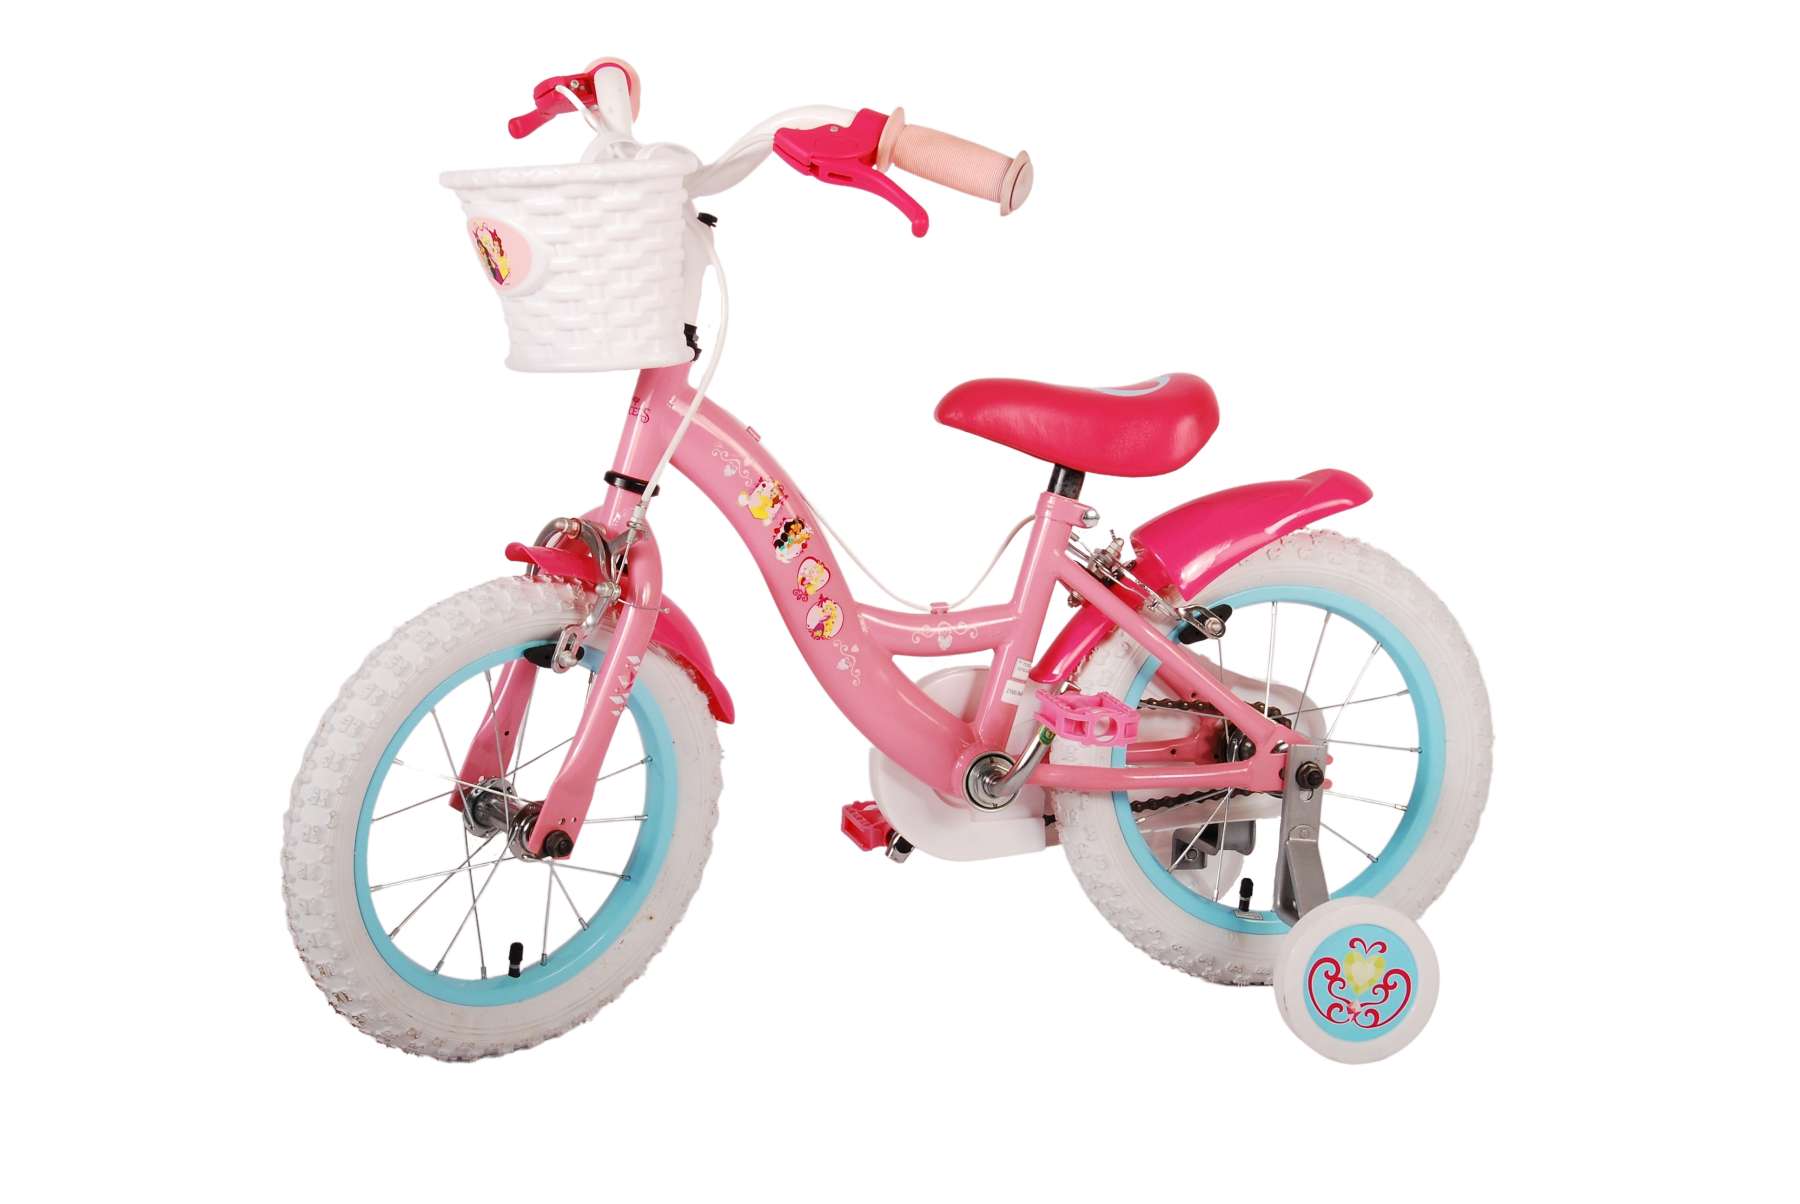 Kinderfahrrad Disney Princess für Mädchen 14 Zoll Kinderrad in Rosa